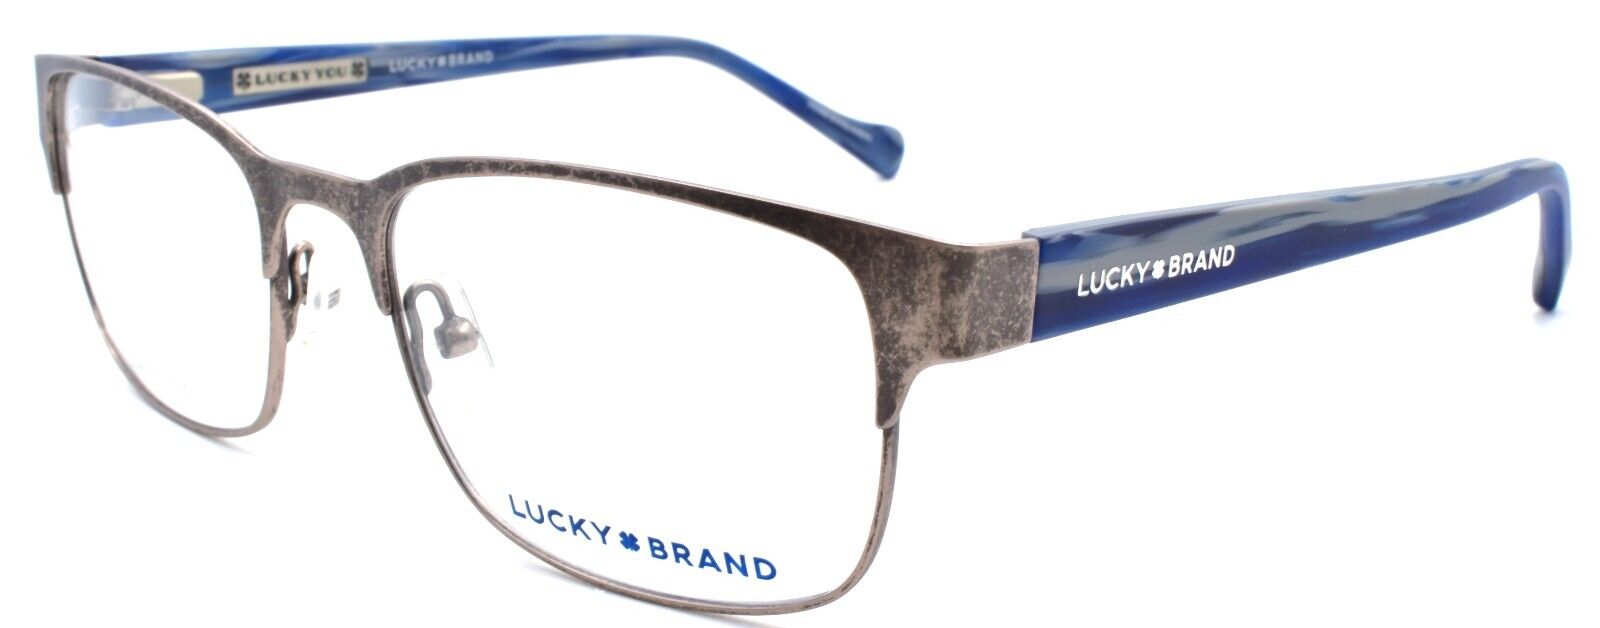 1-LUCKY BRAND D301 Men's Eyeglasses Frames 53-18-140 Distressed Gunmetal-751286281859-IKSpecs